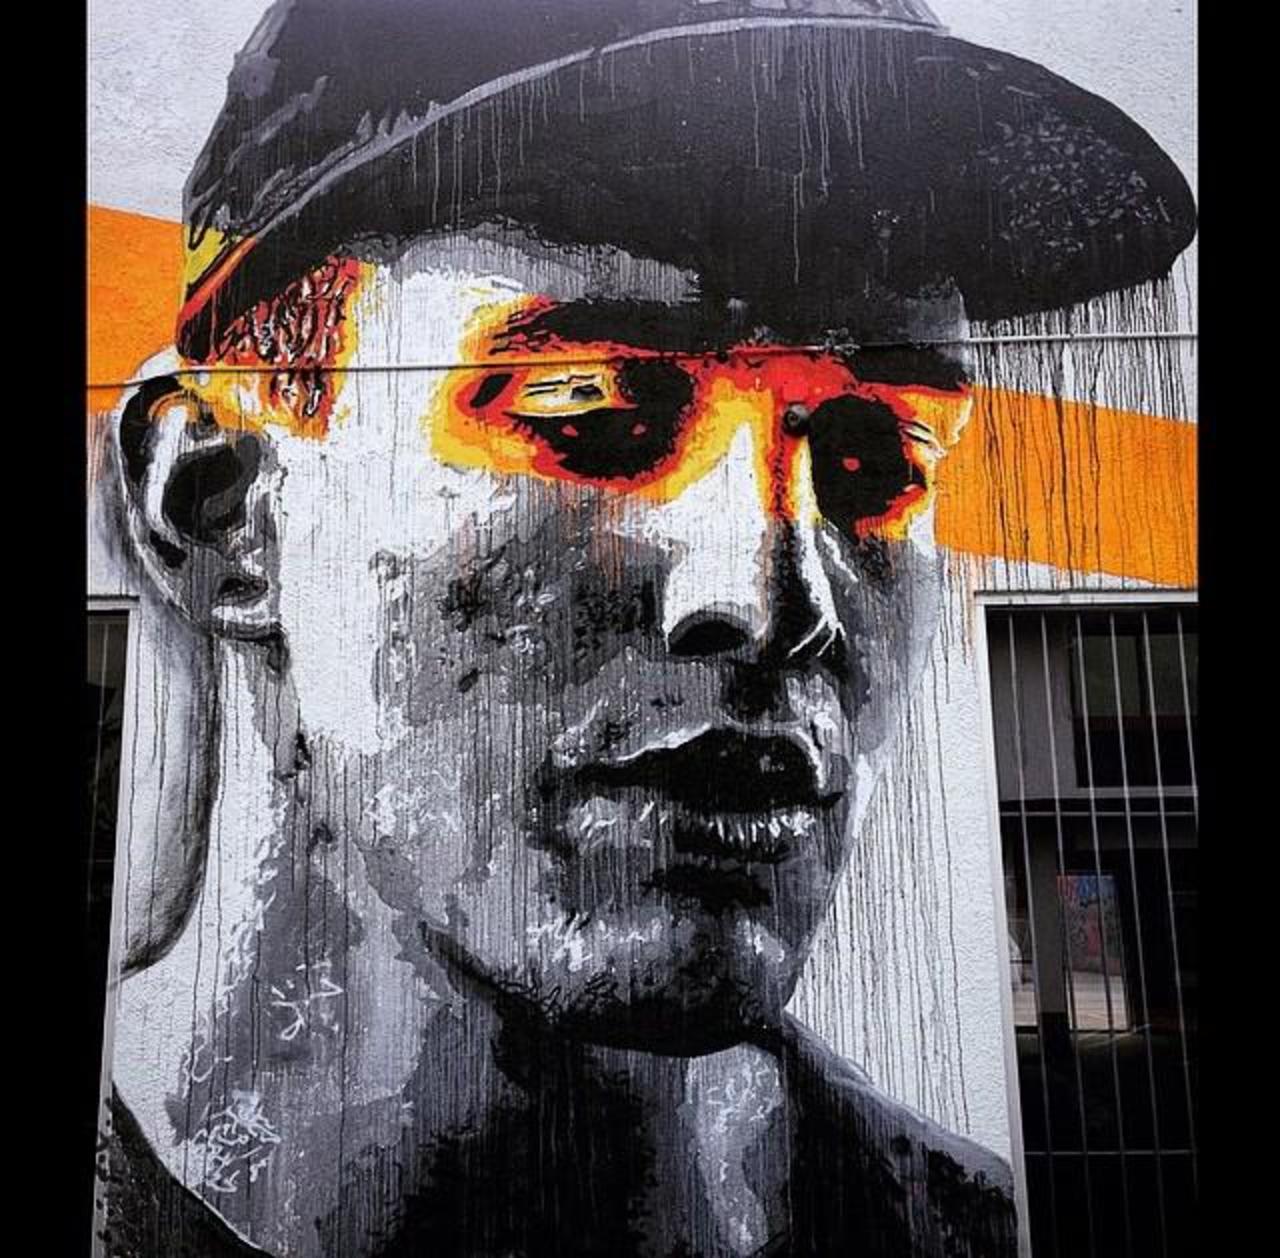 Artist Nils Westergard Street Art portrait in Miami 

#art #graffiti #mural #streetart http://t.co/Be3xT9WCps